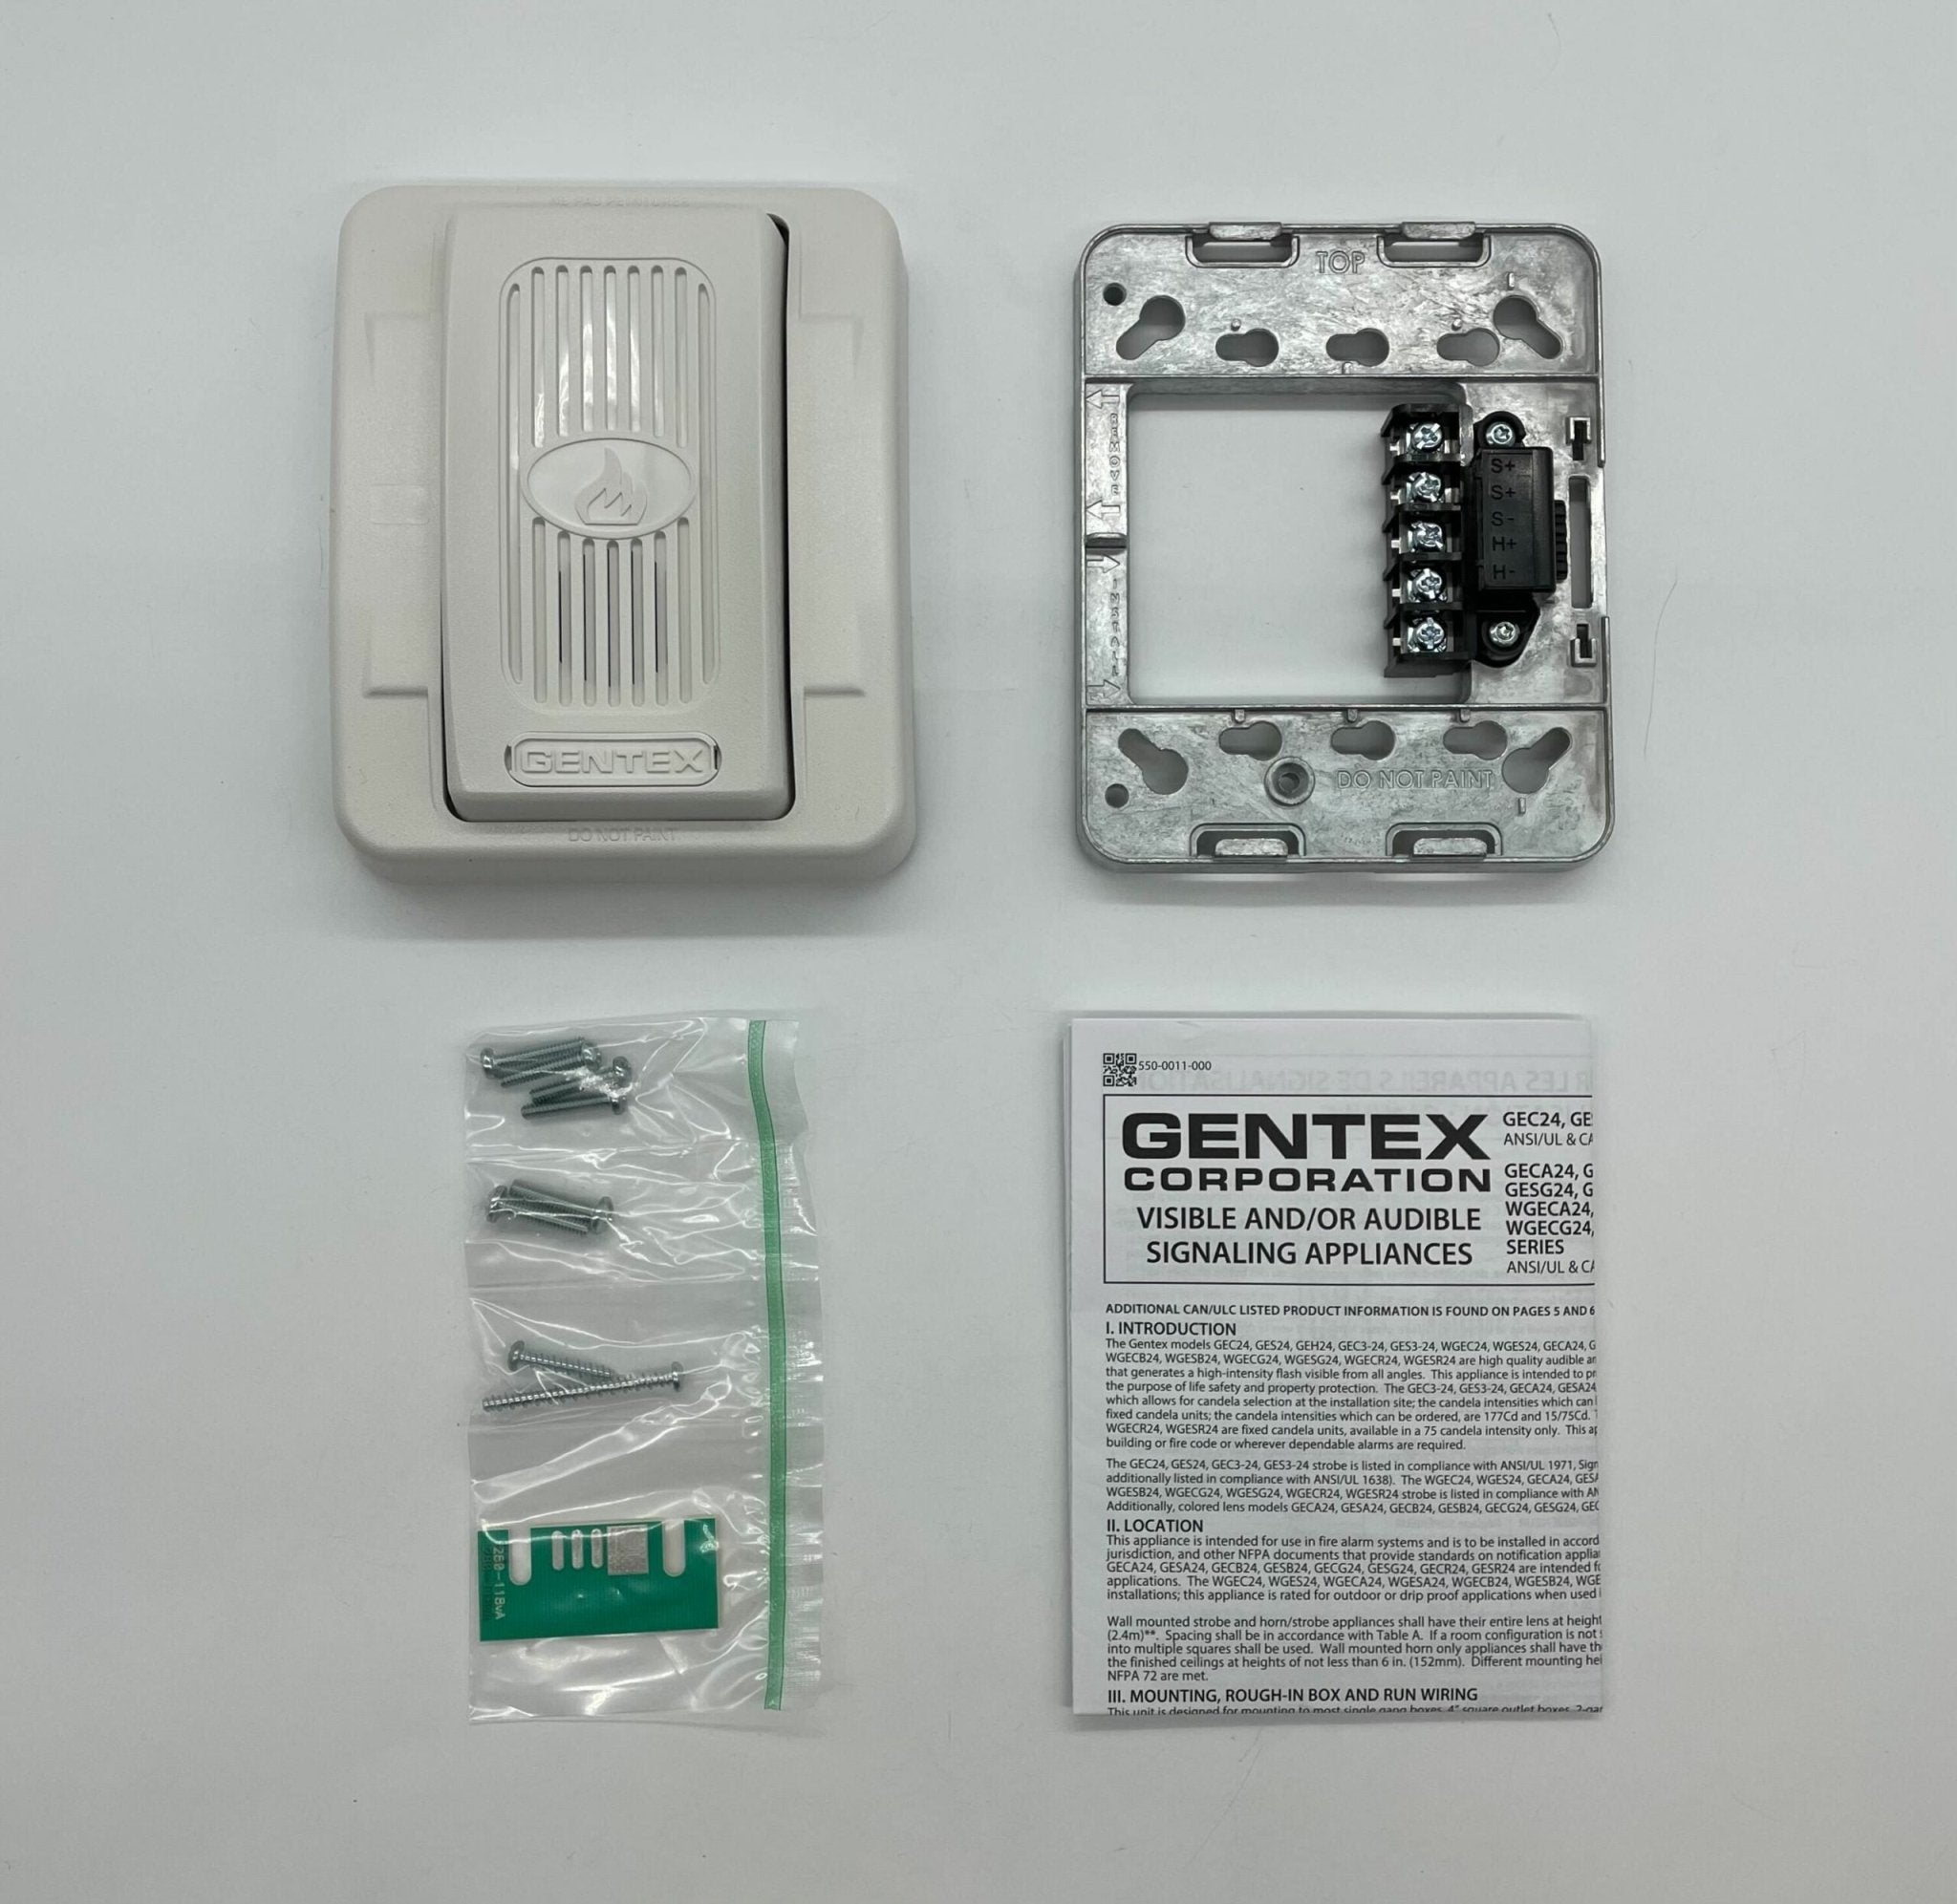 Gentex GEH24-PW - The Fire Alarm Supplier